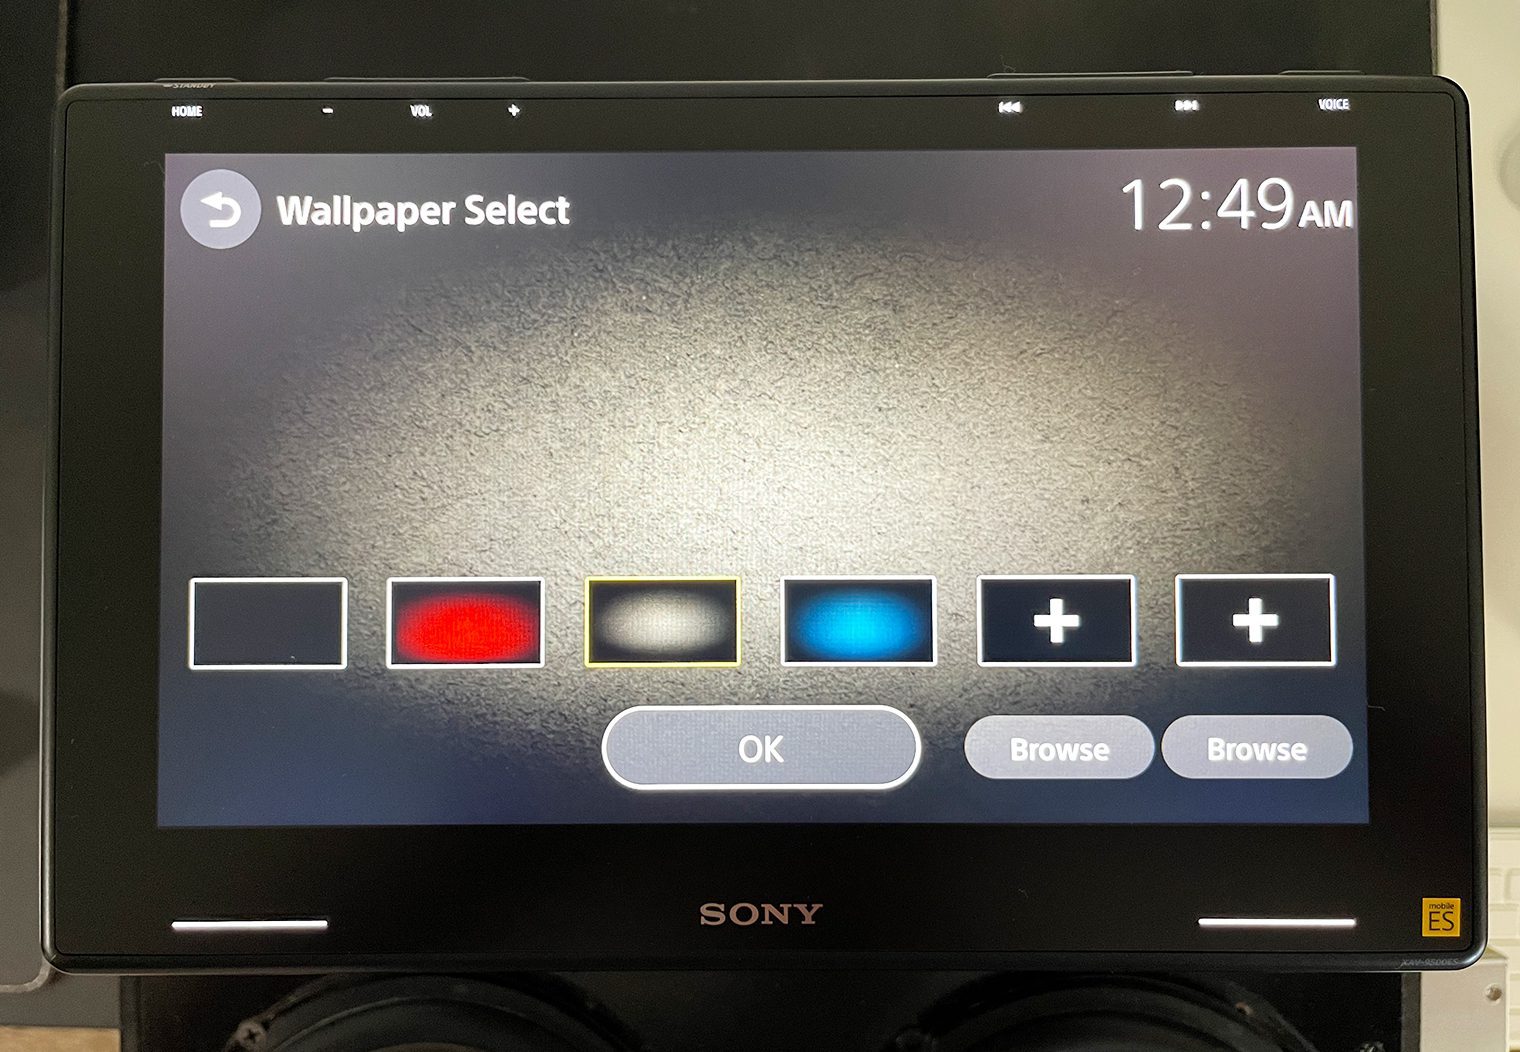 Sony XAV-9500ES wallpaper preset selected